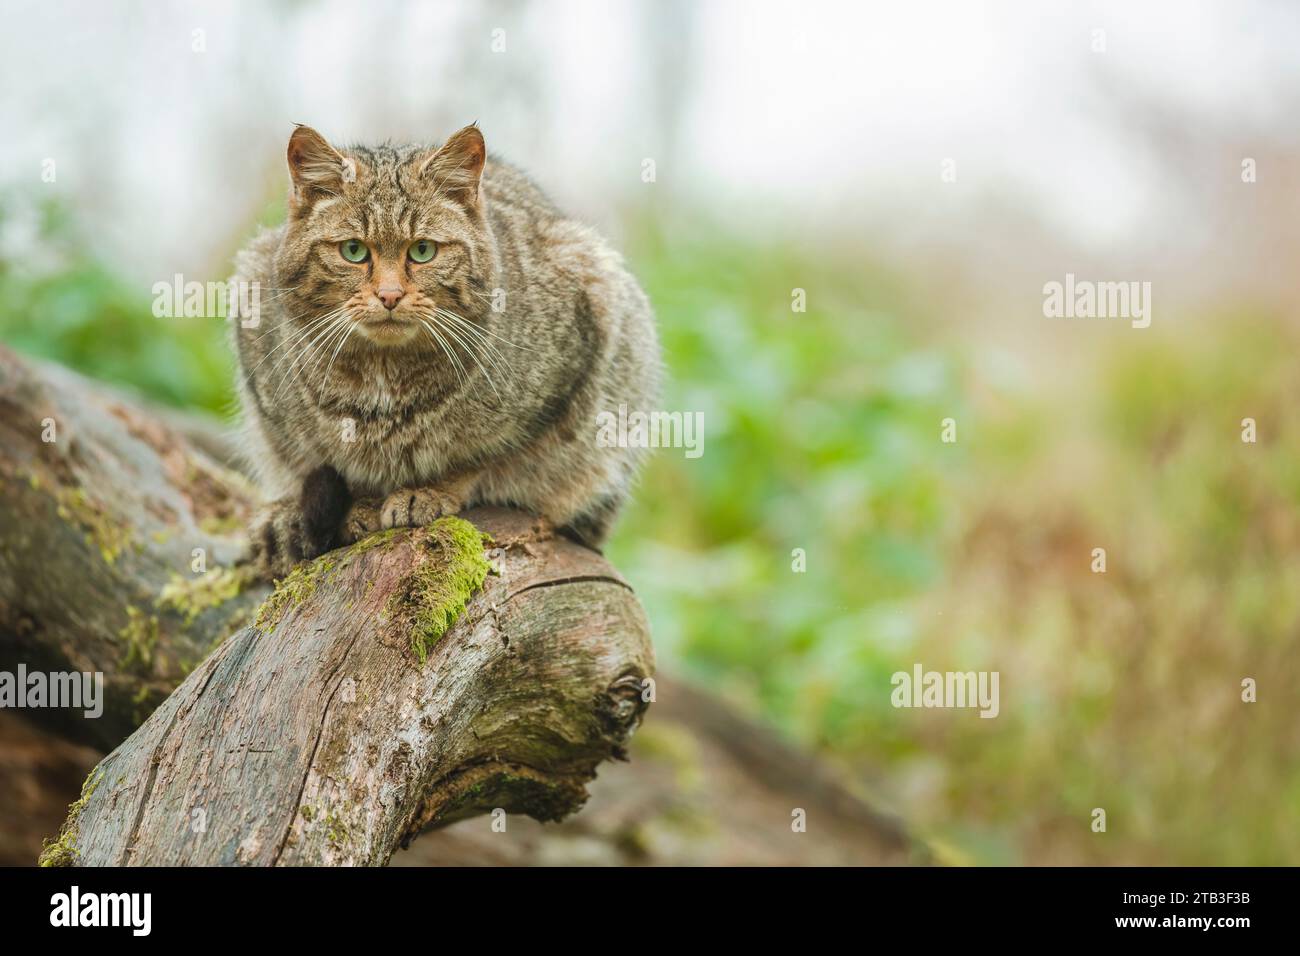 European Wildcat, Felis silvestris Stock Photo